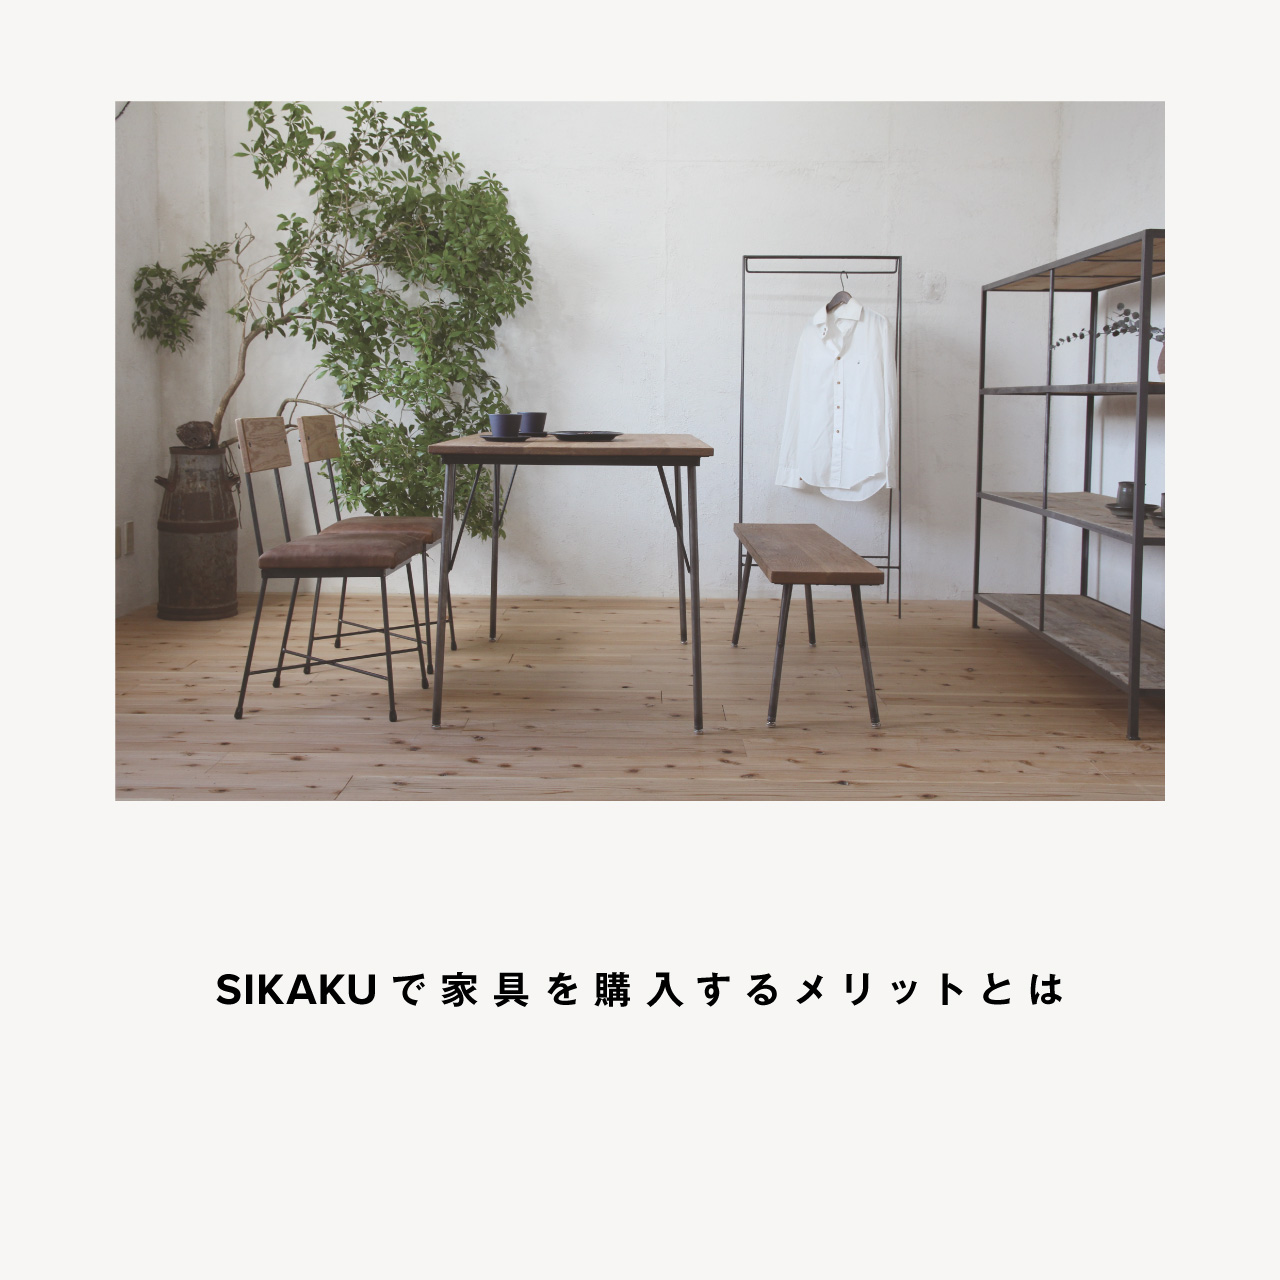 SIKAKUで家具を購入するメリットについてご紹介